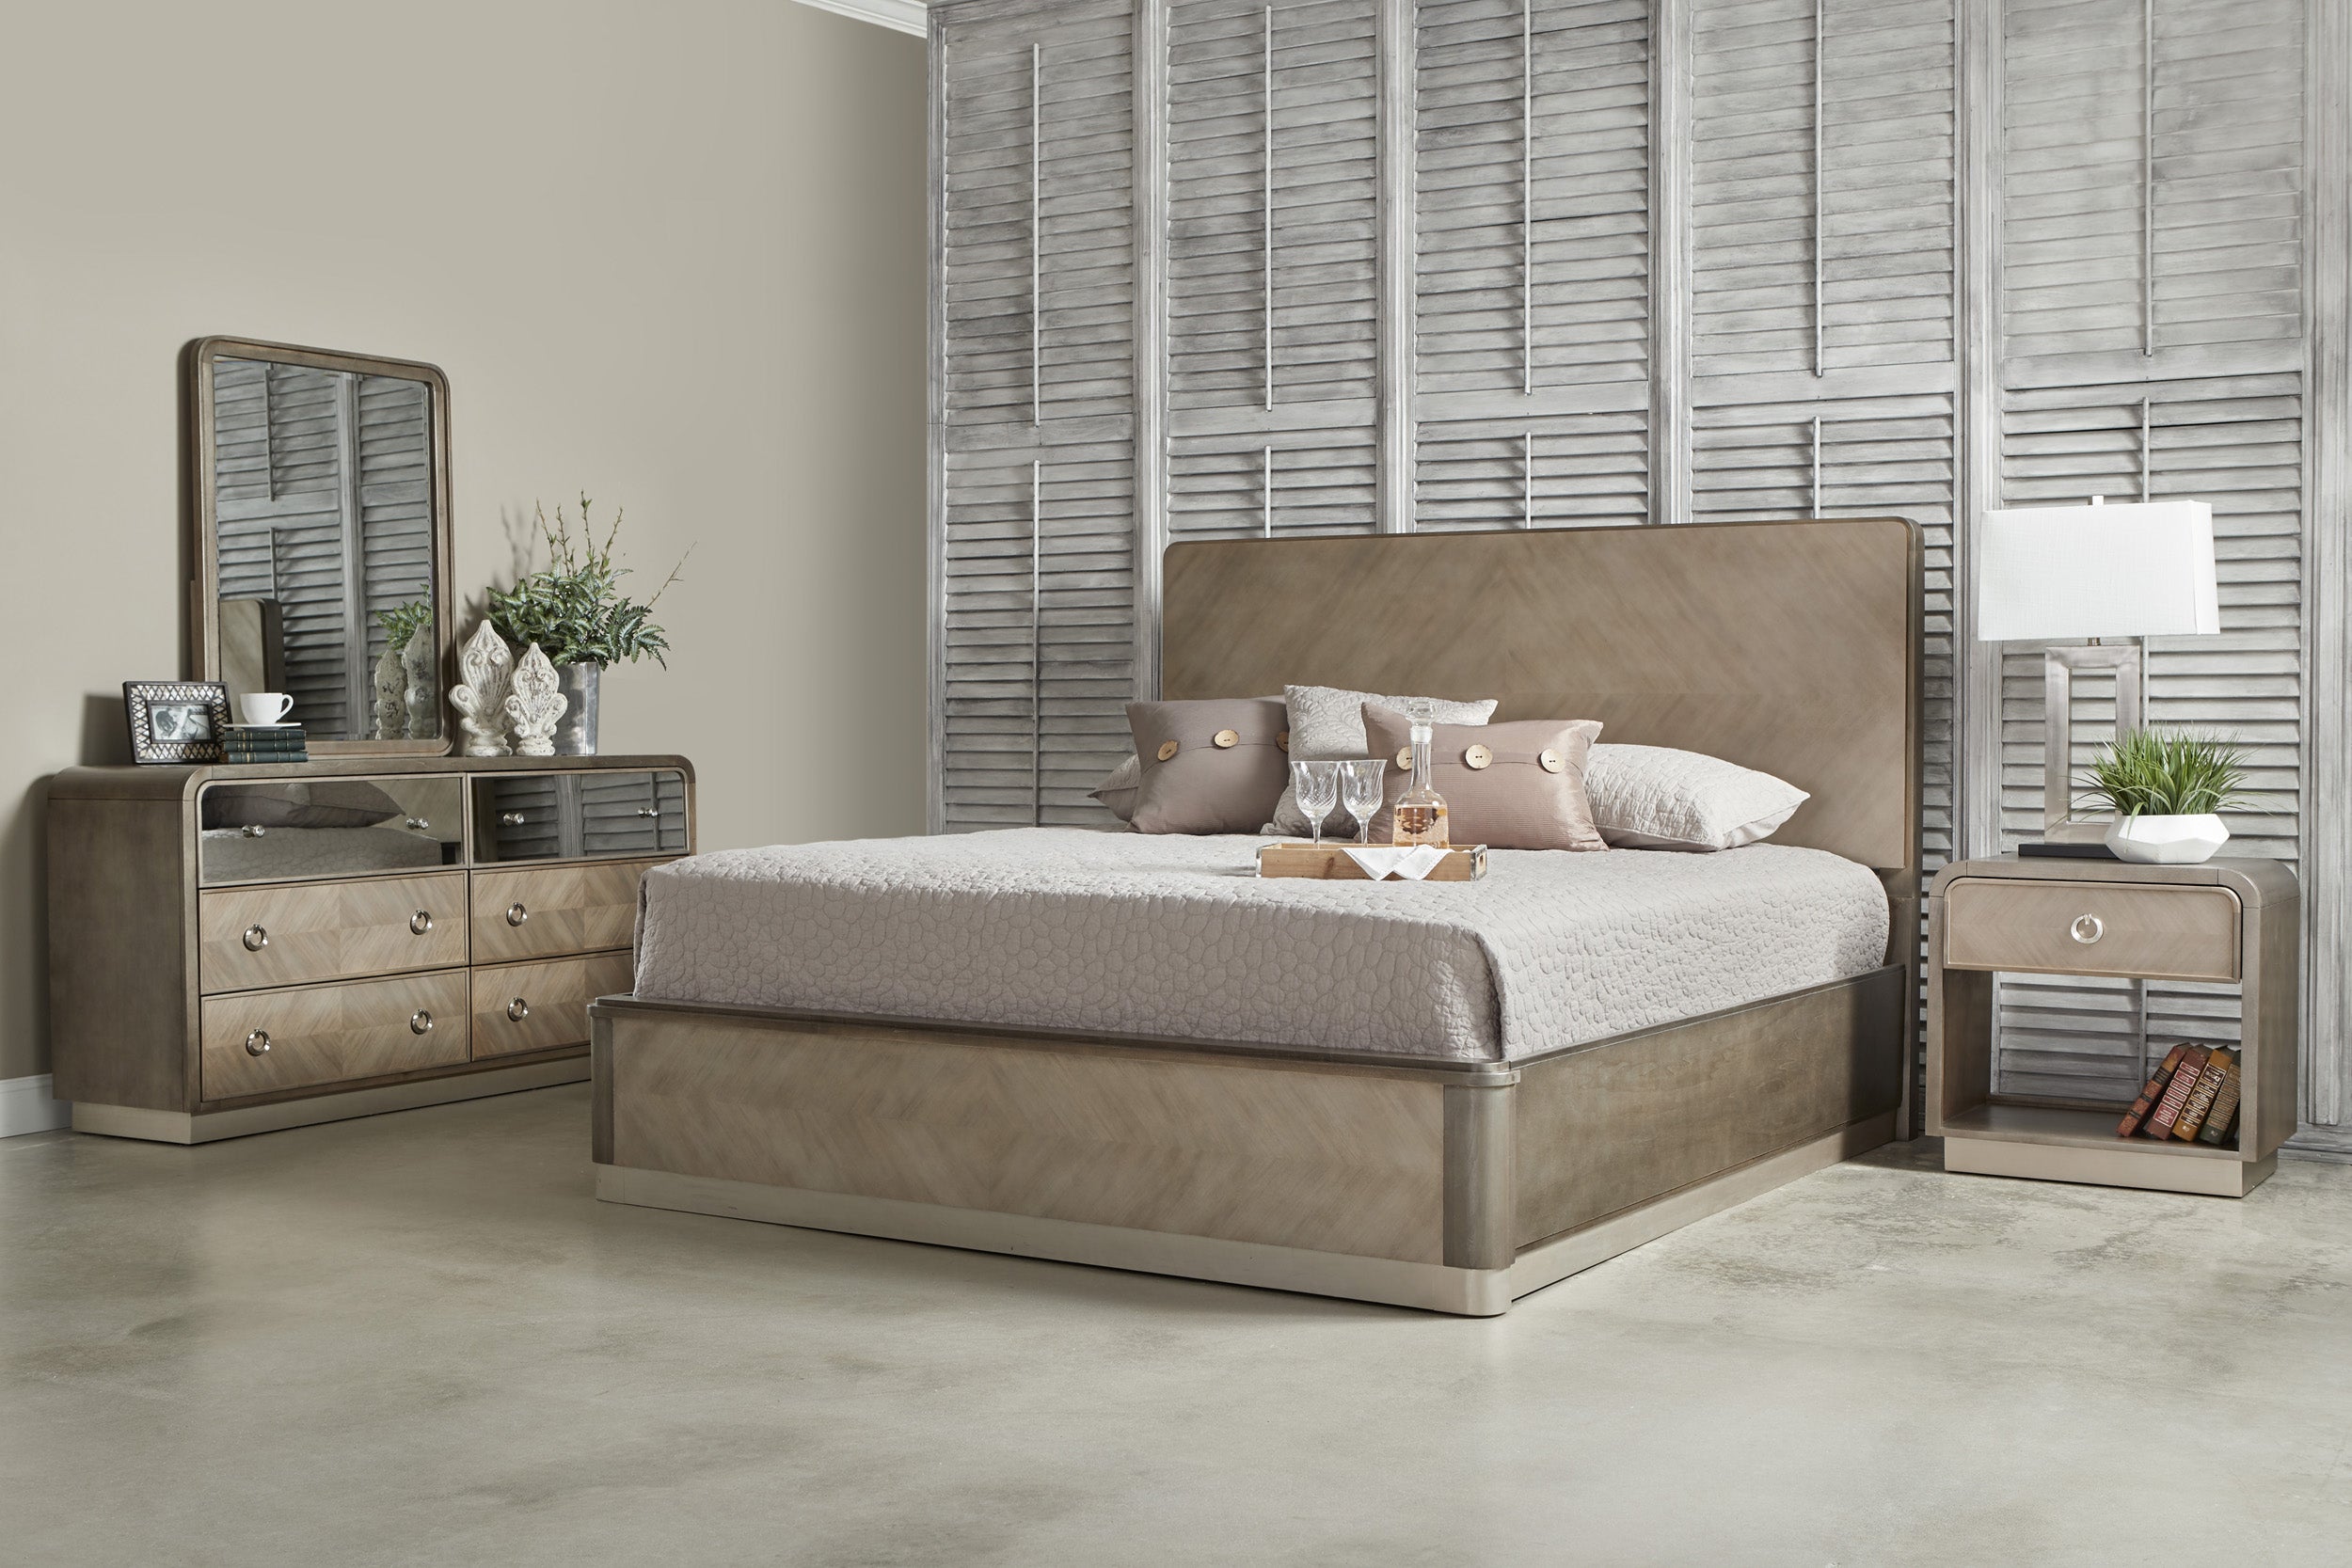 Oasis Home Cascade 5-Piece King Size Bedroom Furniture Set